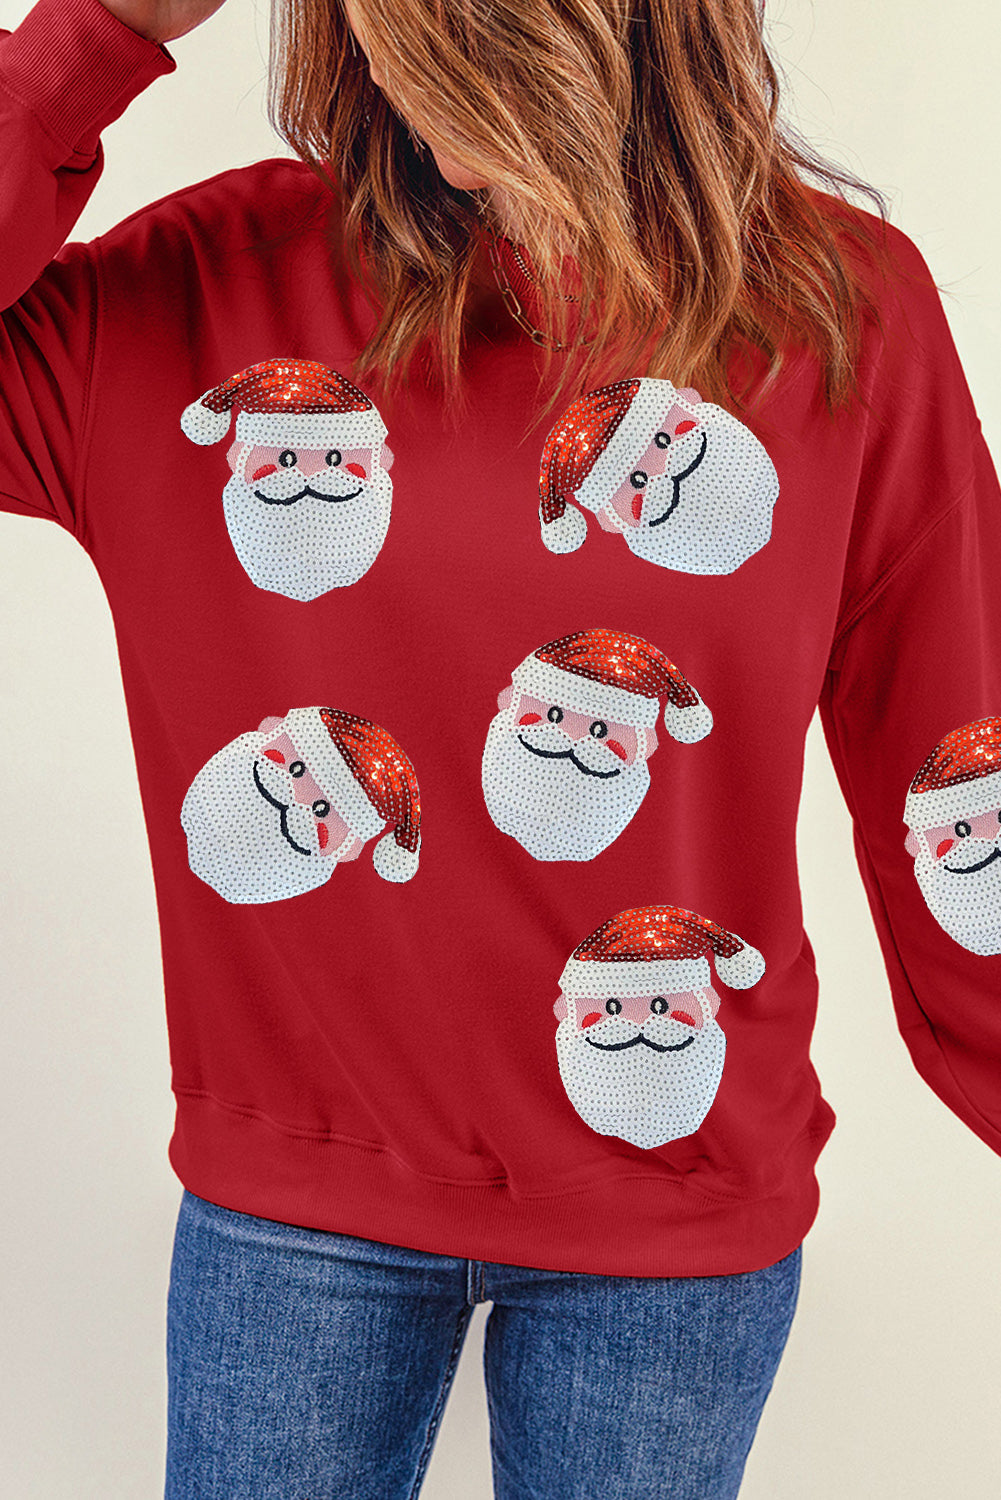 Red Sequins Santa Claus Graphic Christmas Sweatshirt